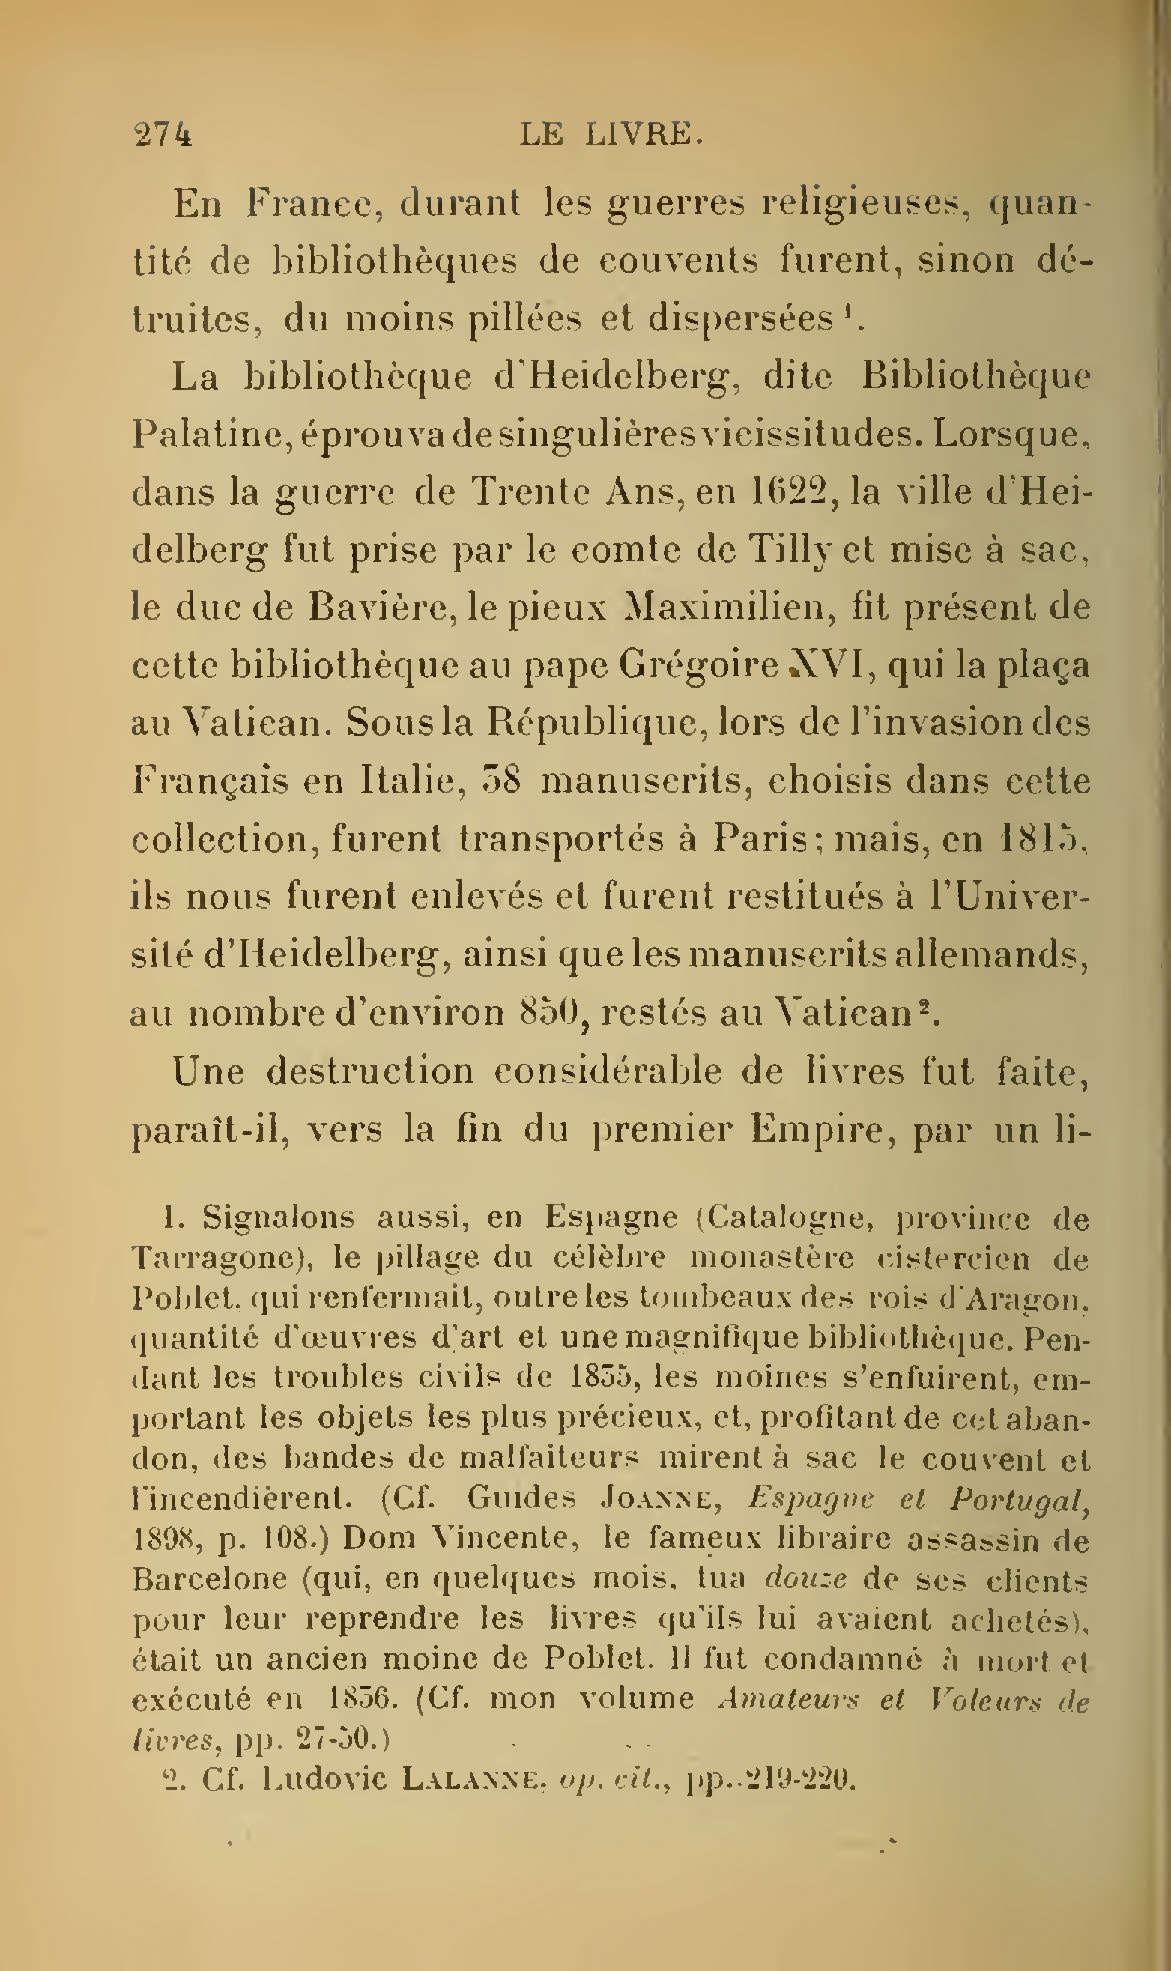 Albert Cim, Le Livre, t. II, p. 274.